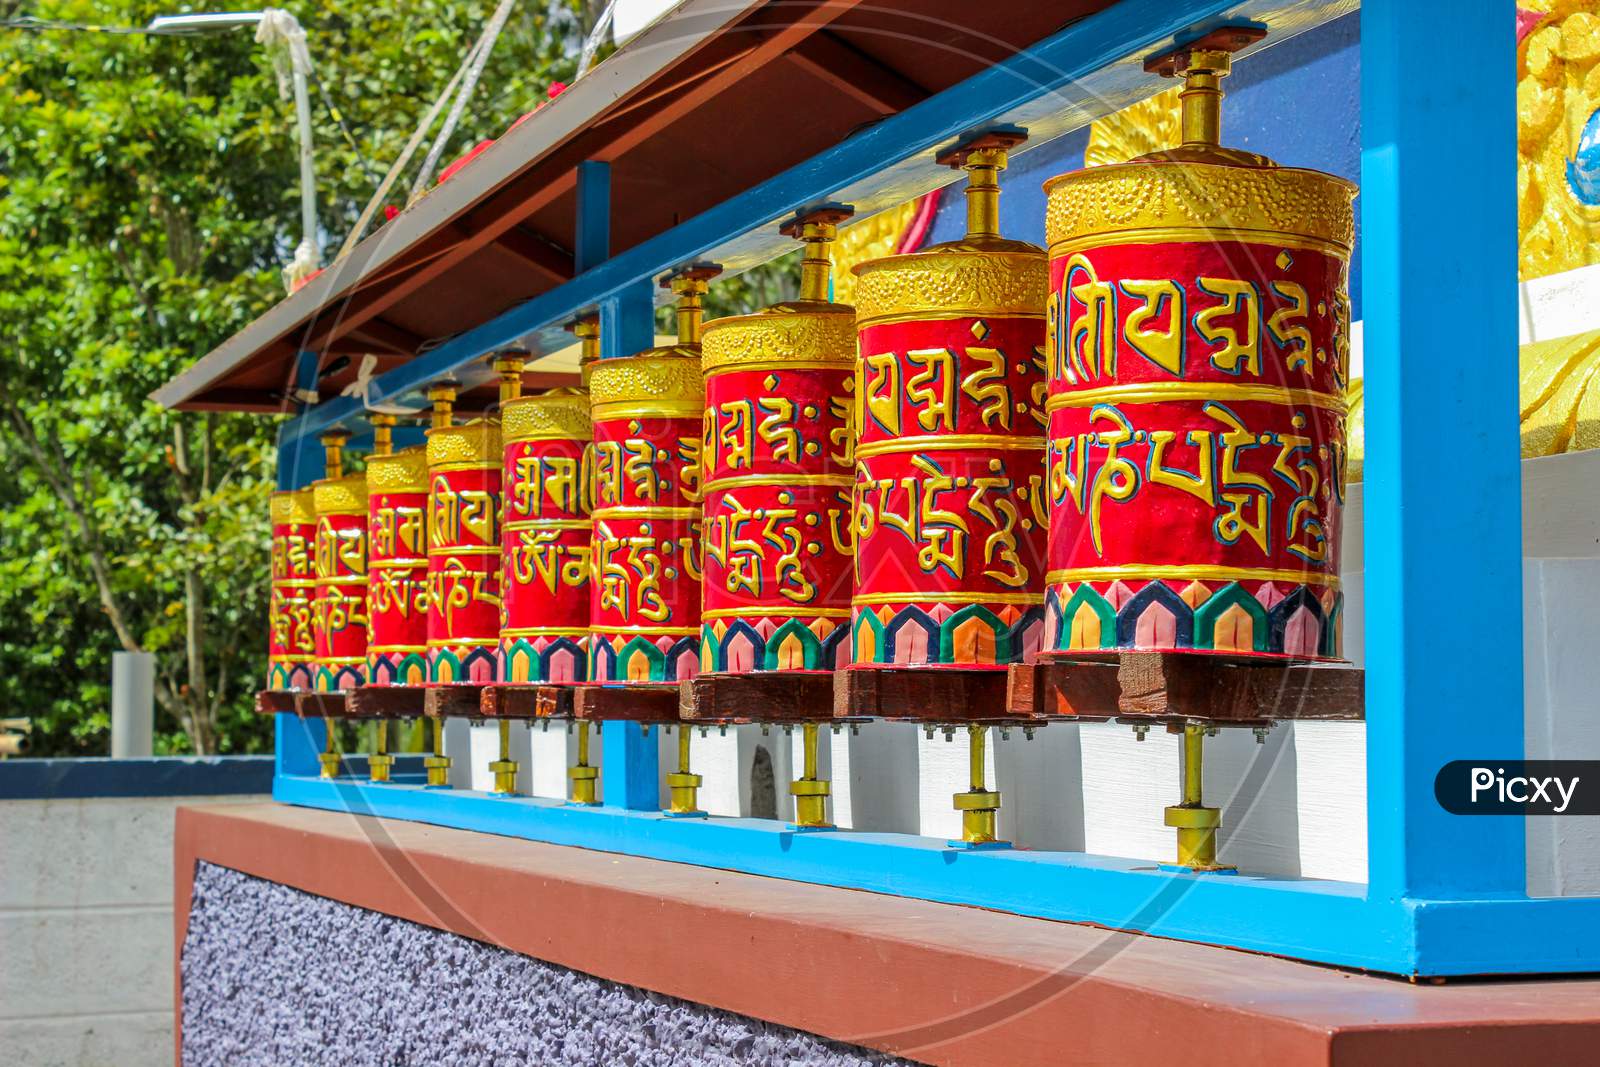 Tibetan Prayer wheels at Bylakuppe in Karnataka/India.